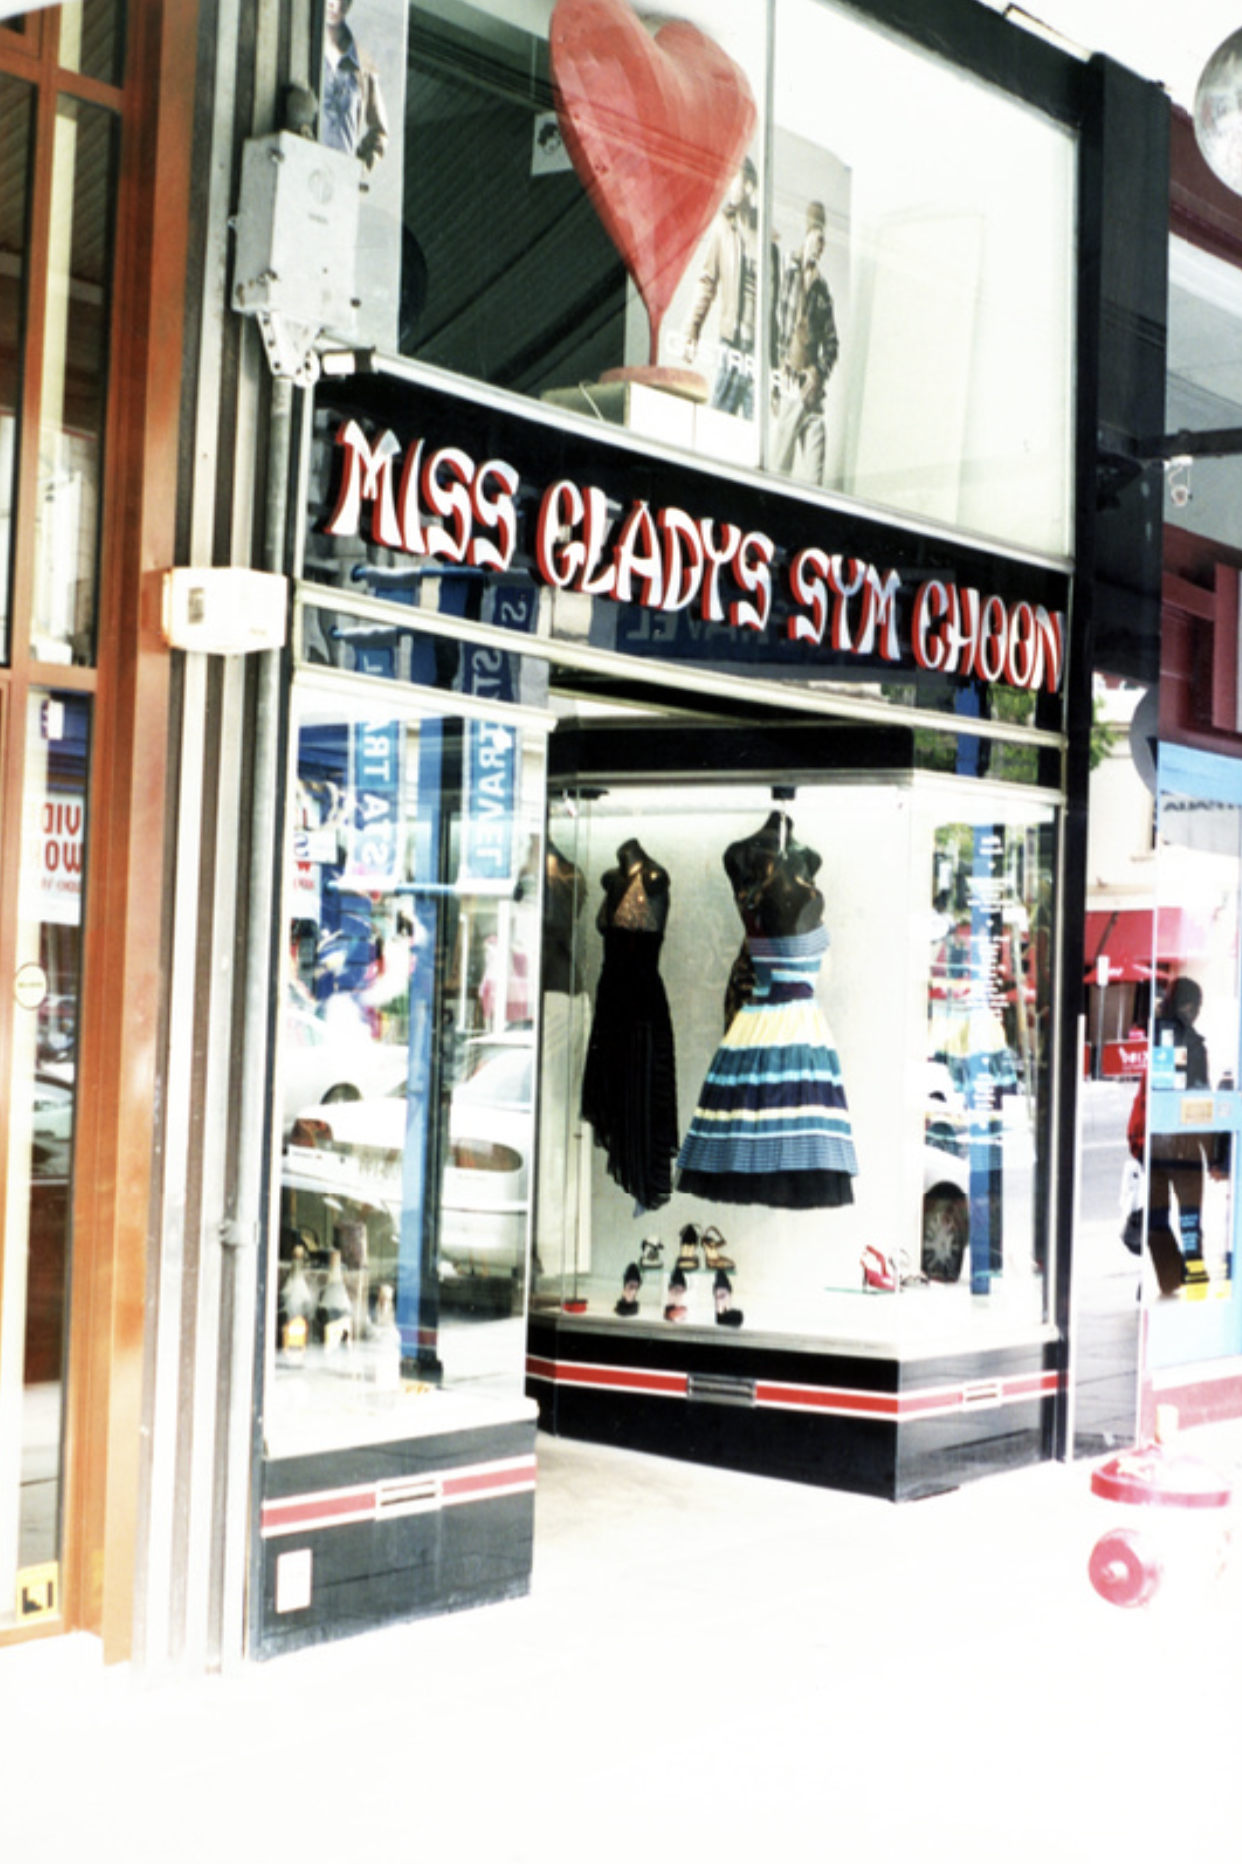 Miss Gladys Sym Choon store front, 2003. SLSA: B 68693